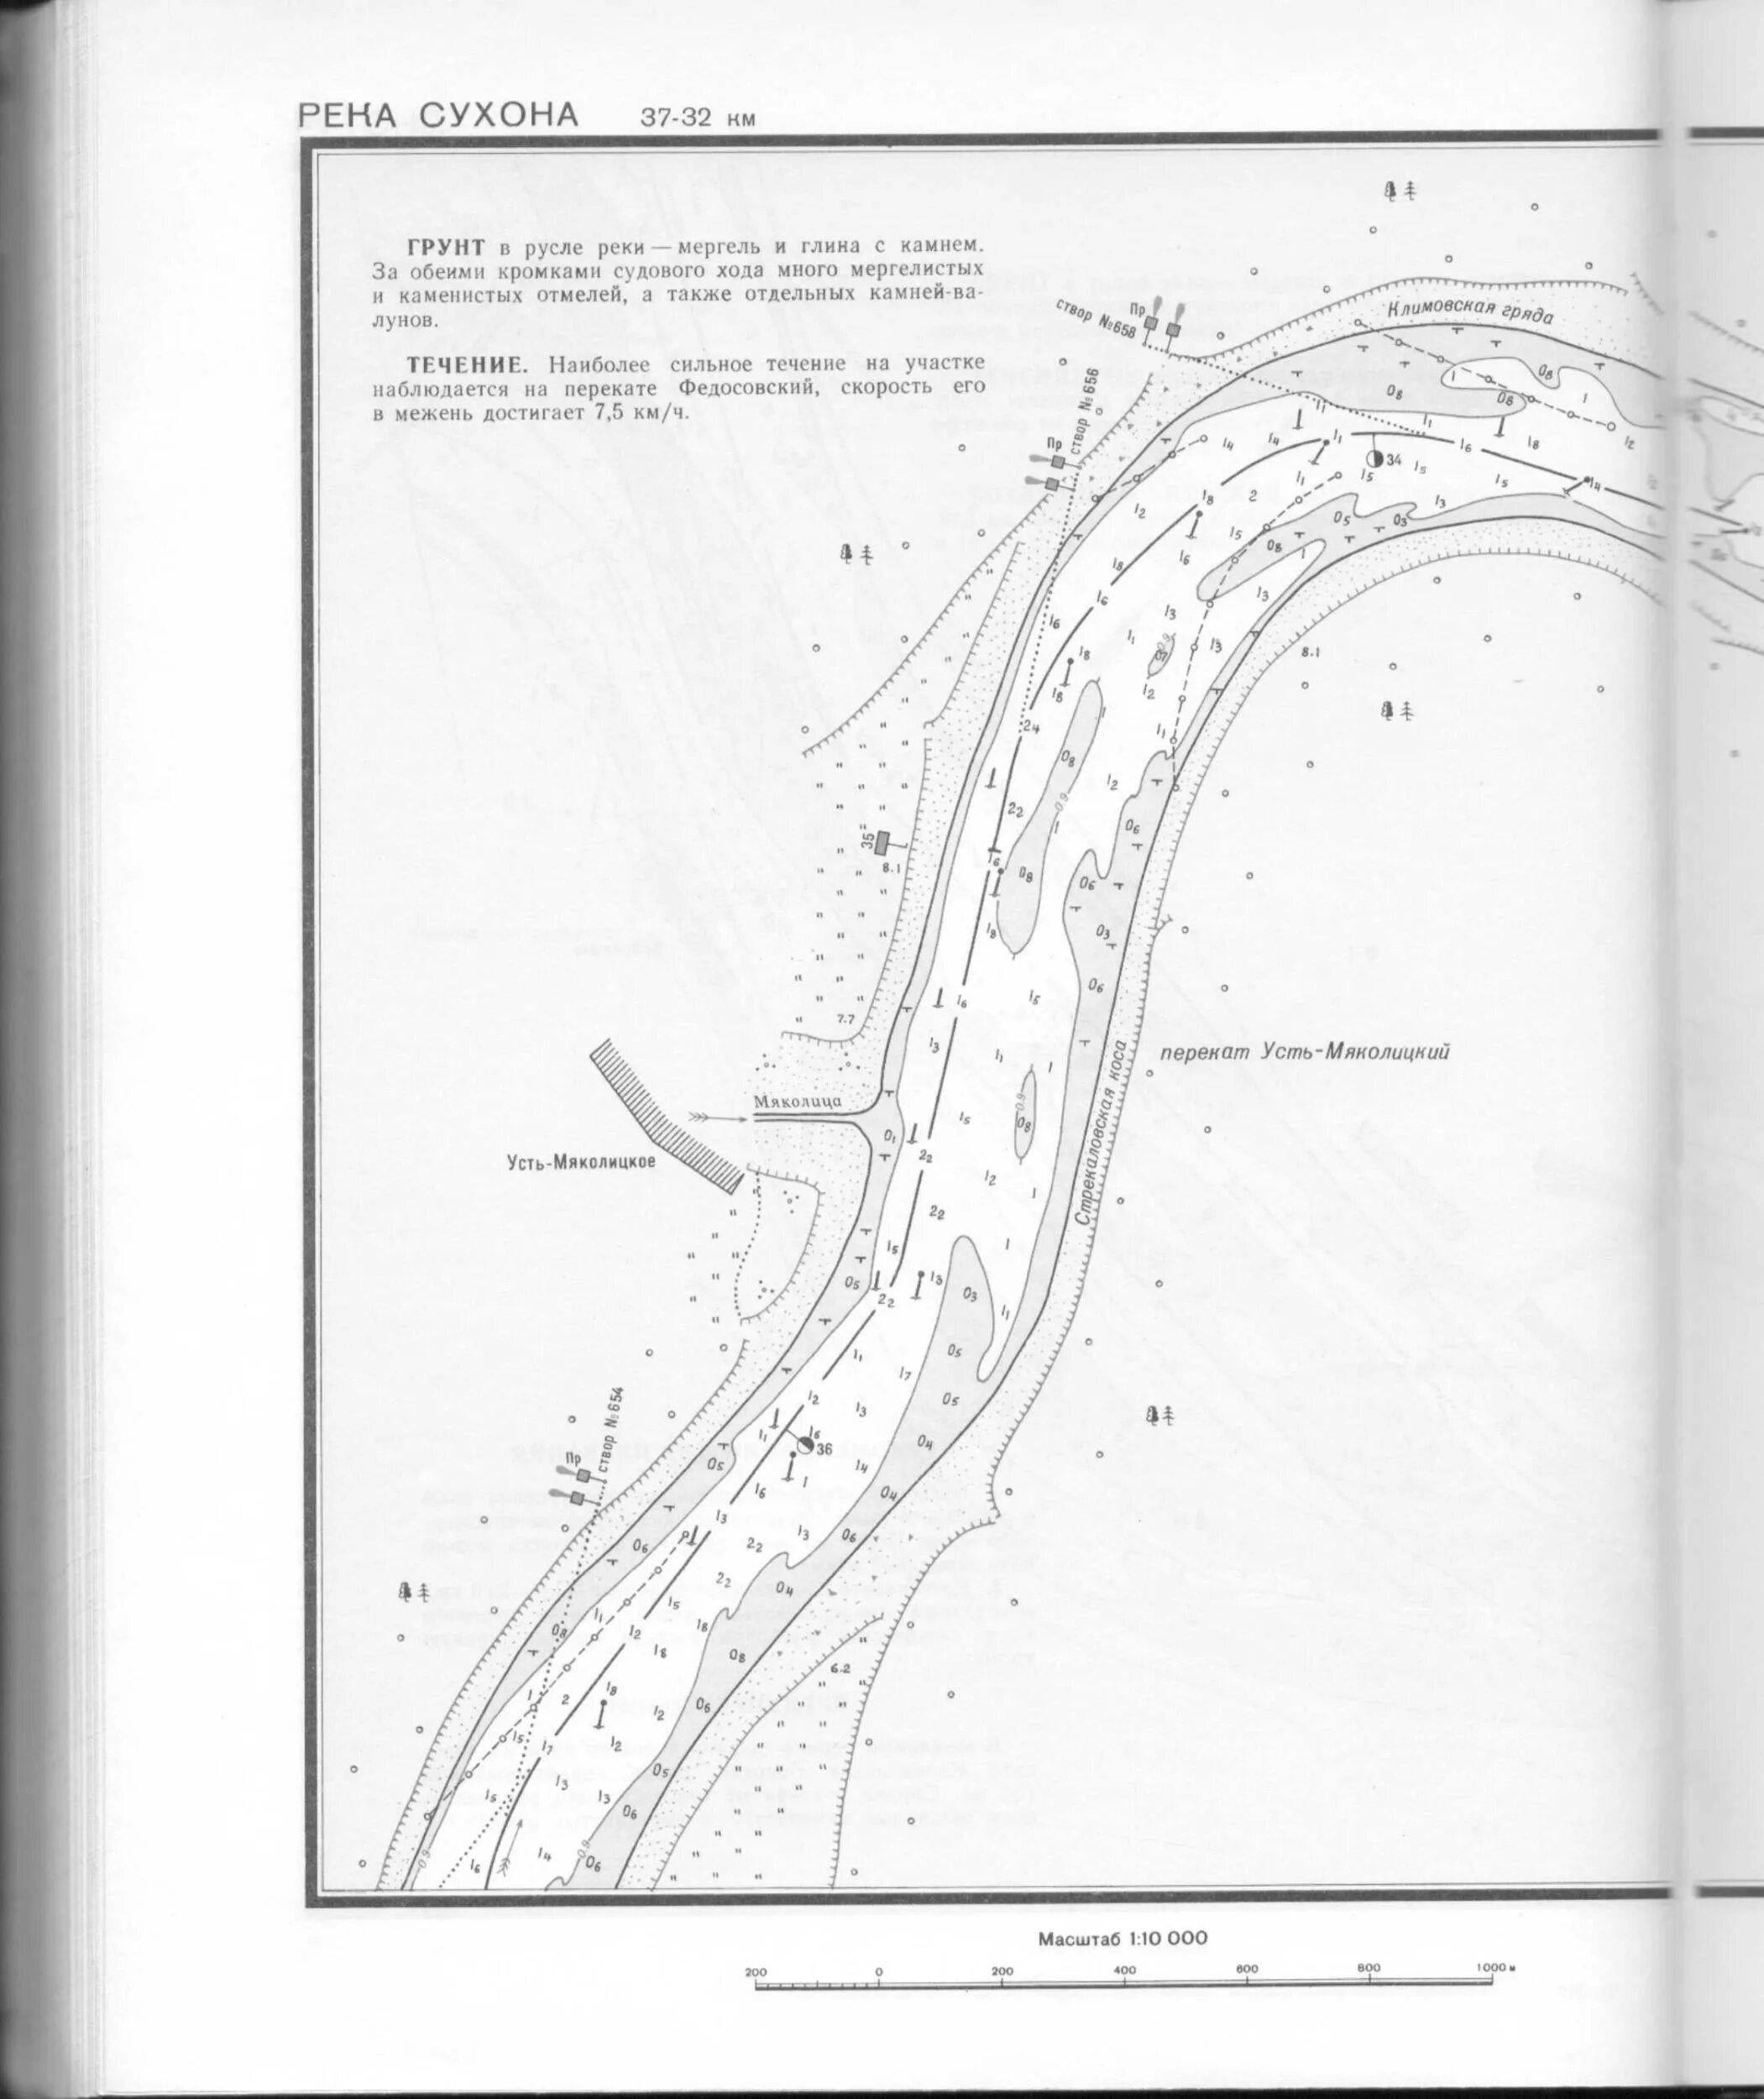 Высота реки сухона. Лоция реки Сухона Вологодская. Река Сухона на карте. Рельеф дна реки Сухона. Схема реки Сухоны.